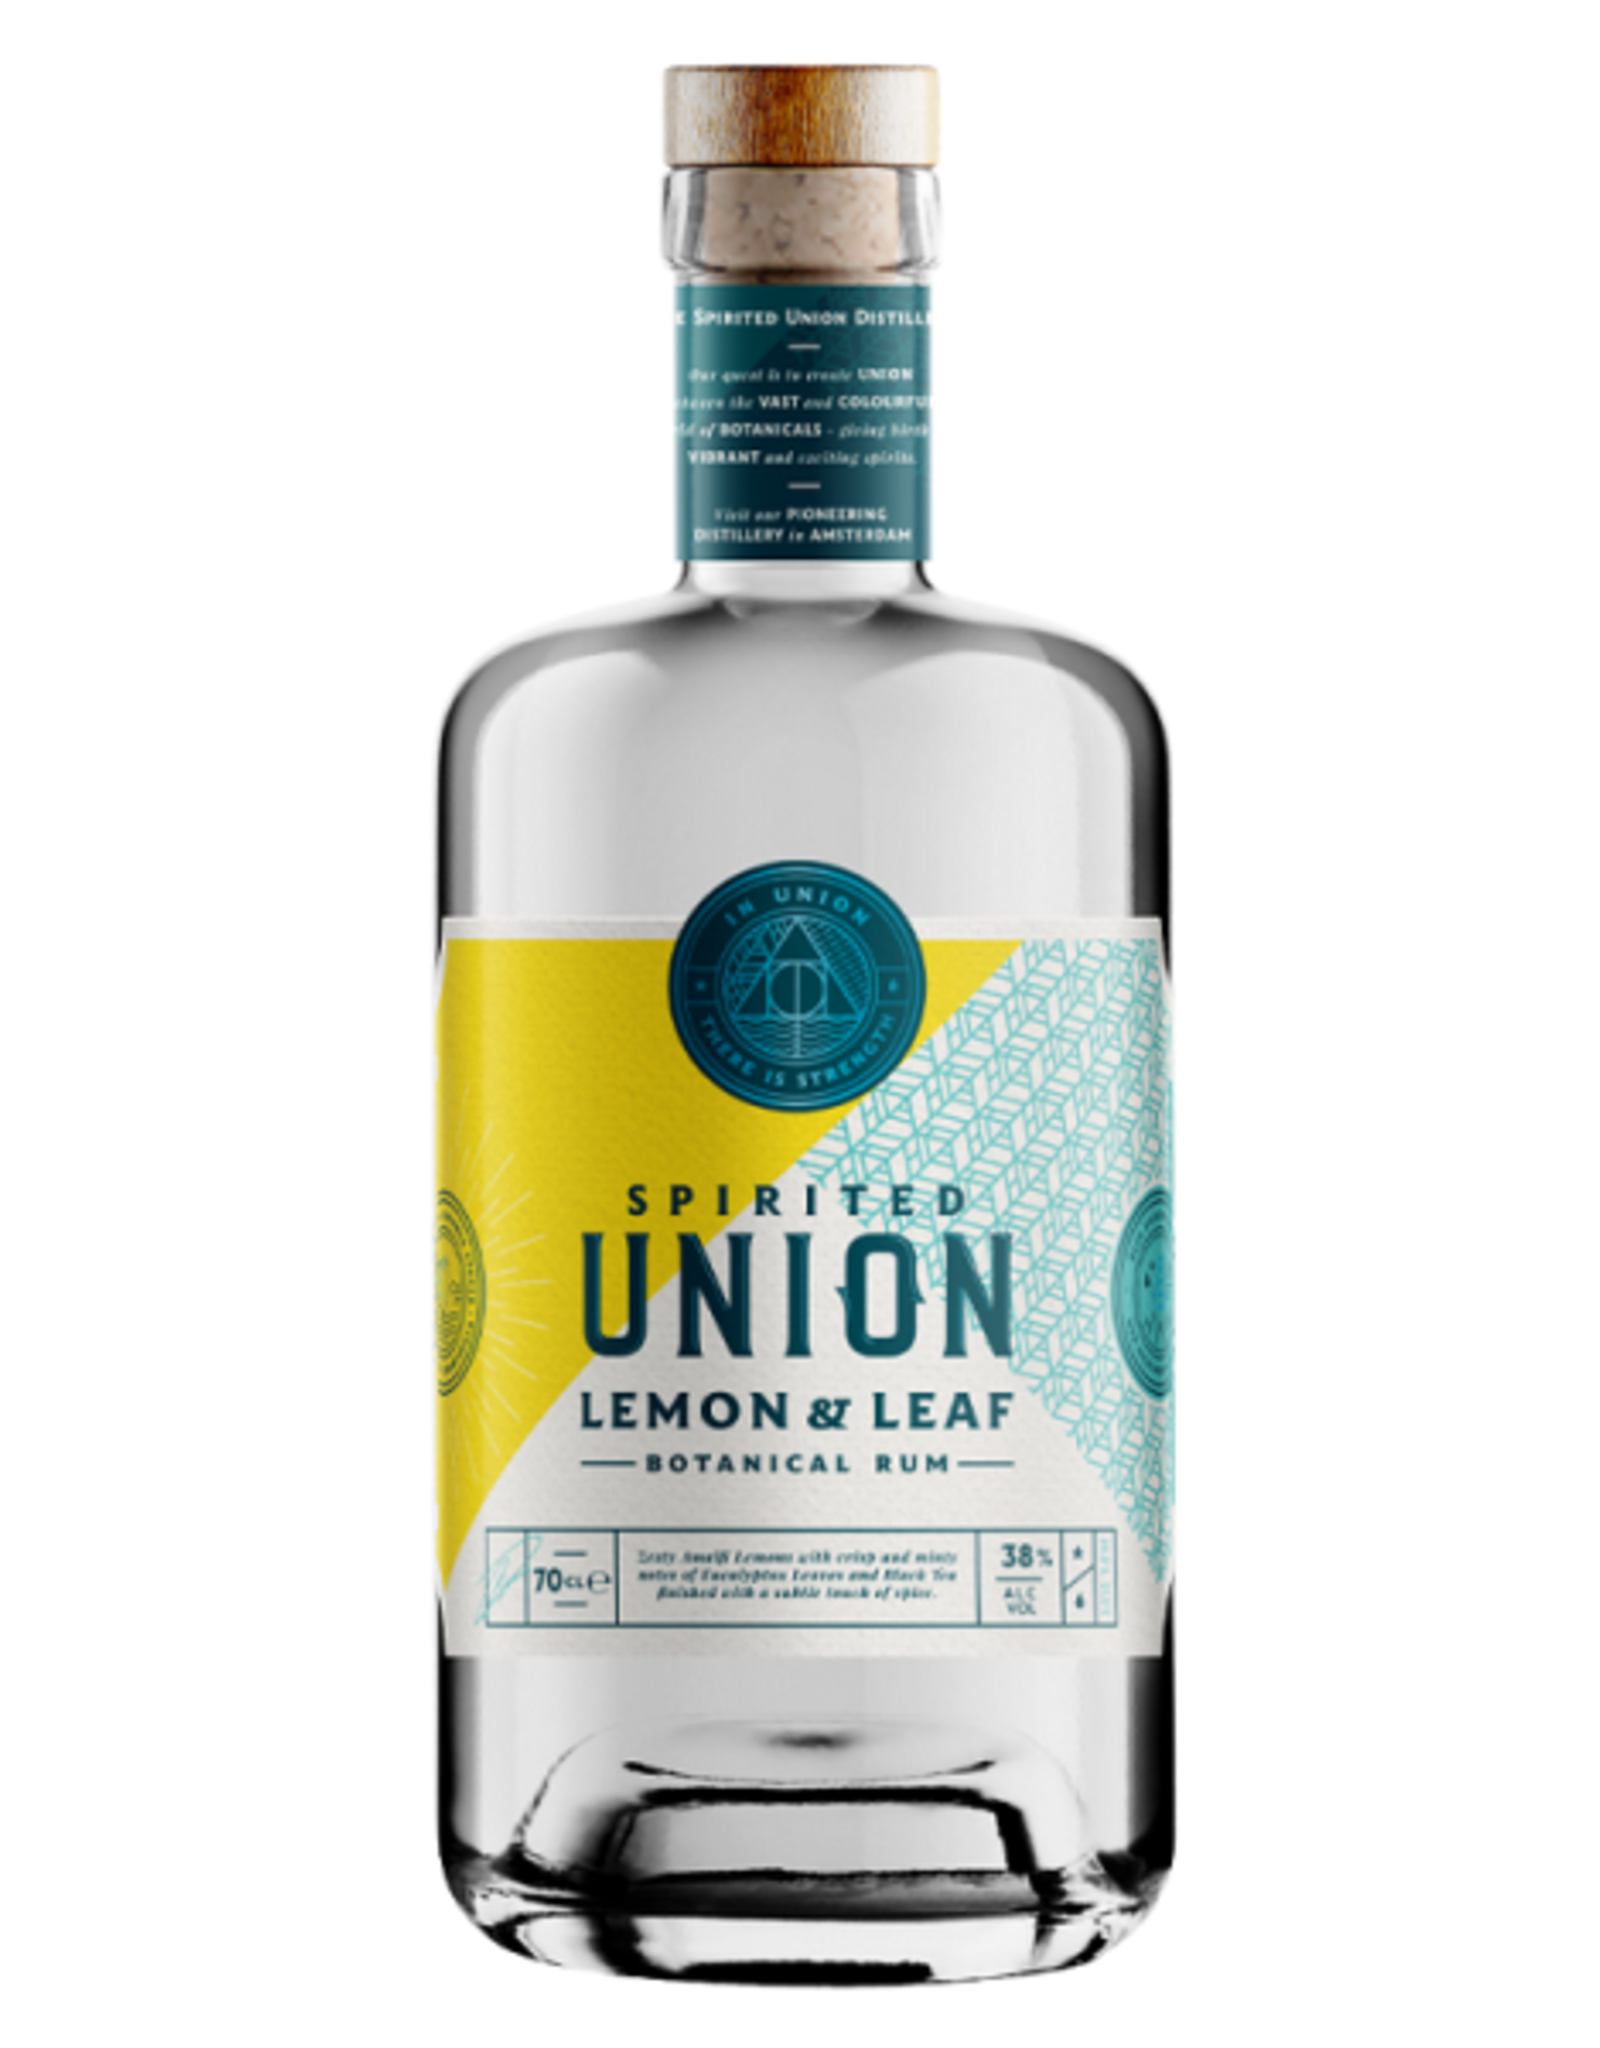 Spirits by Vanguard 0.7L Lemon and Leaf Spirited Union Rum